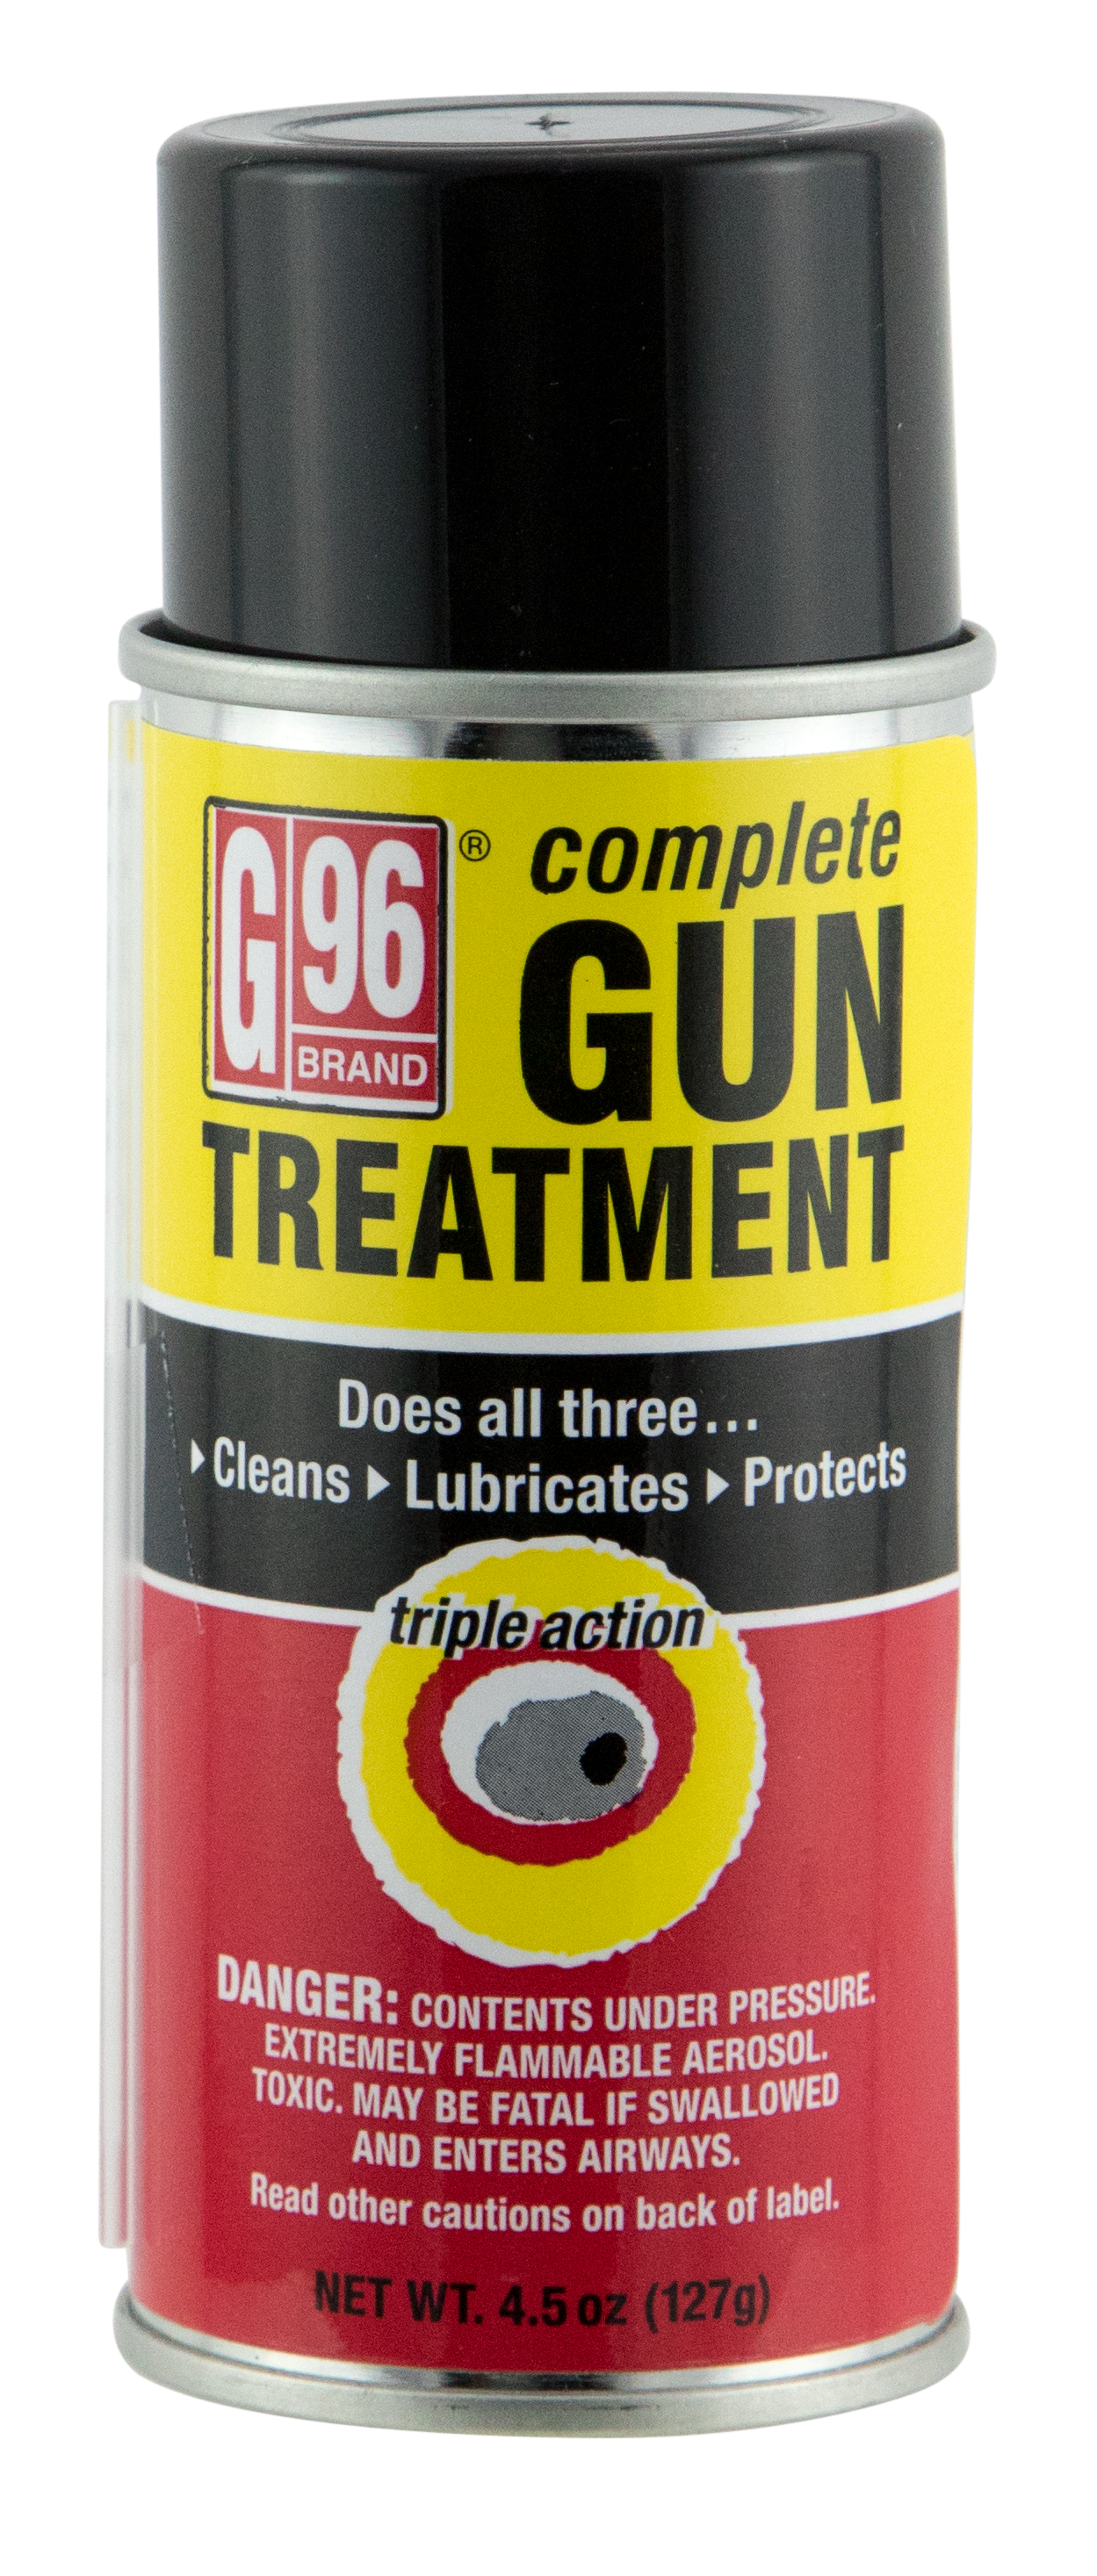 G96 1055 Gun Treatment Cleans, Lubricates, Prevents Rust & Corrosion 4.5 oz Aerosol